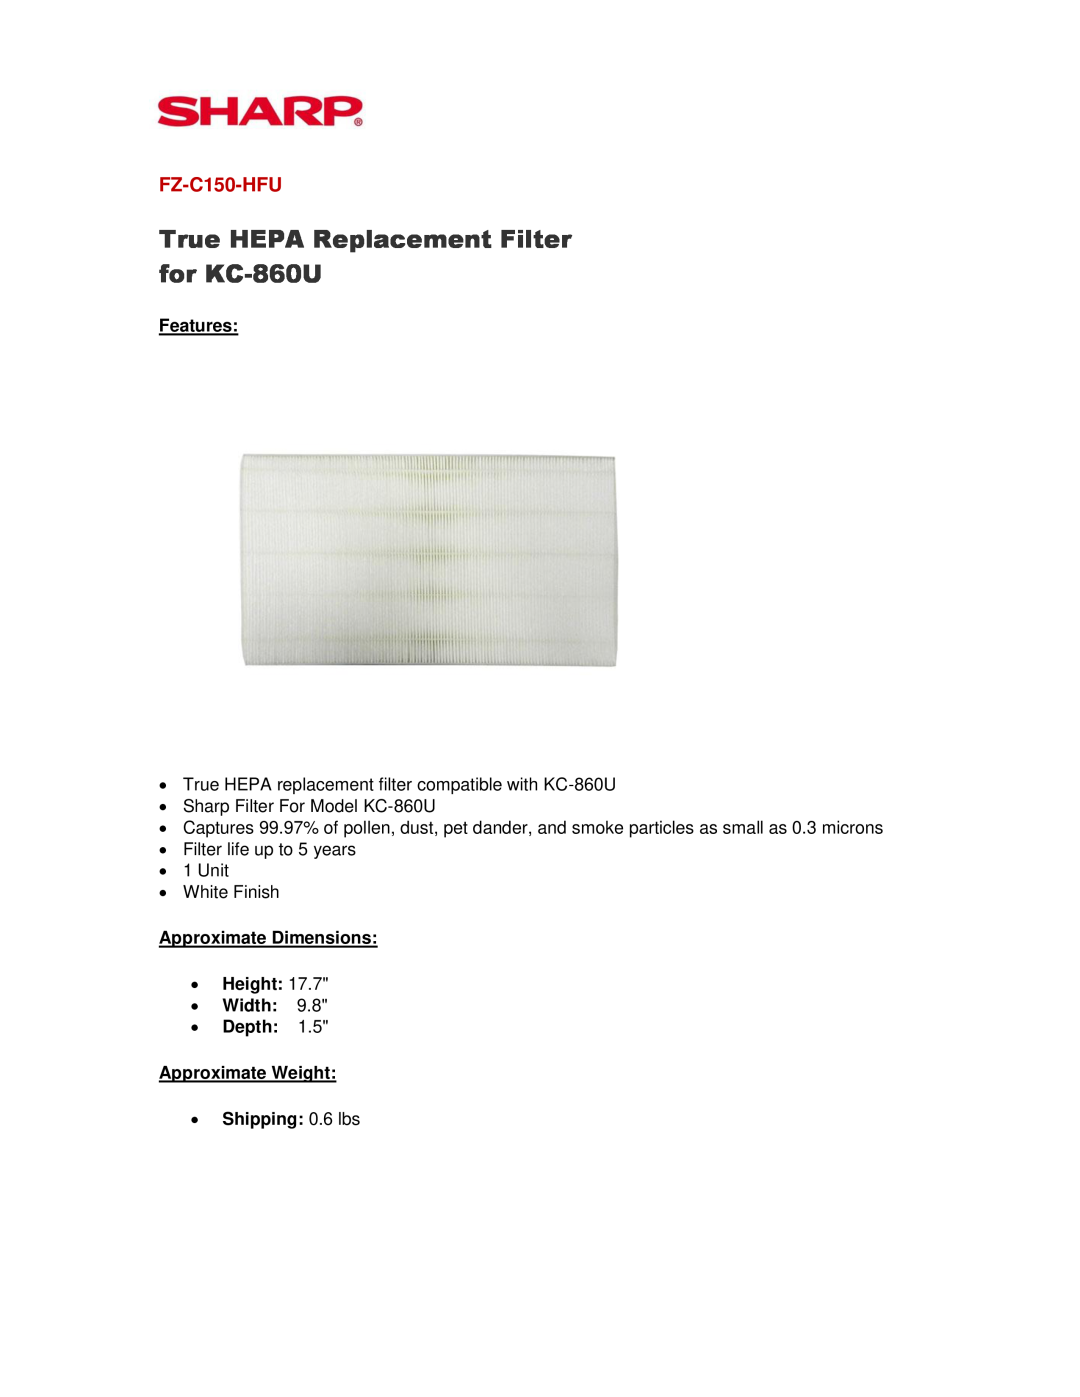 Sharp FZC150HFU dimensions True HEPA Replacement Filter for KC-860U, FZ-C150-HFU, Features 